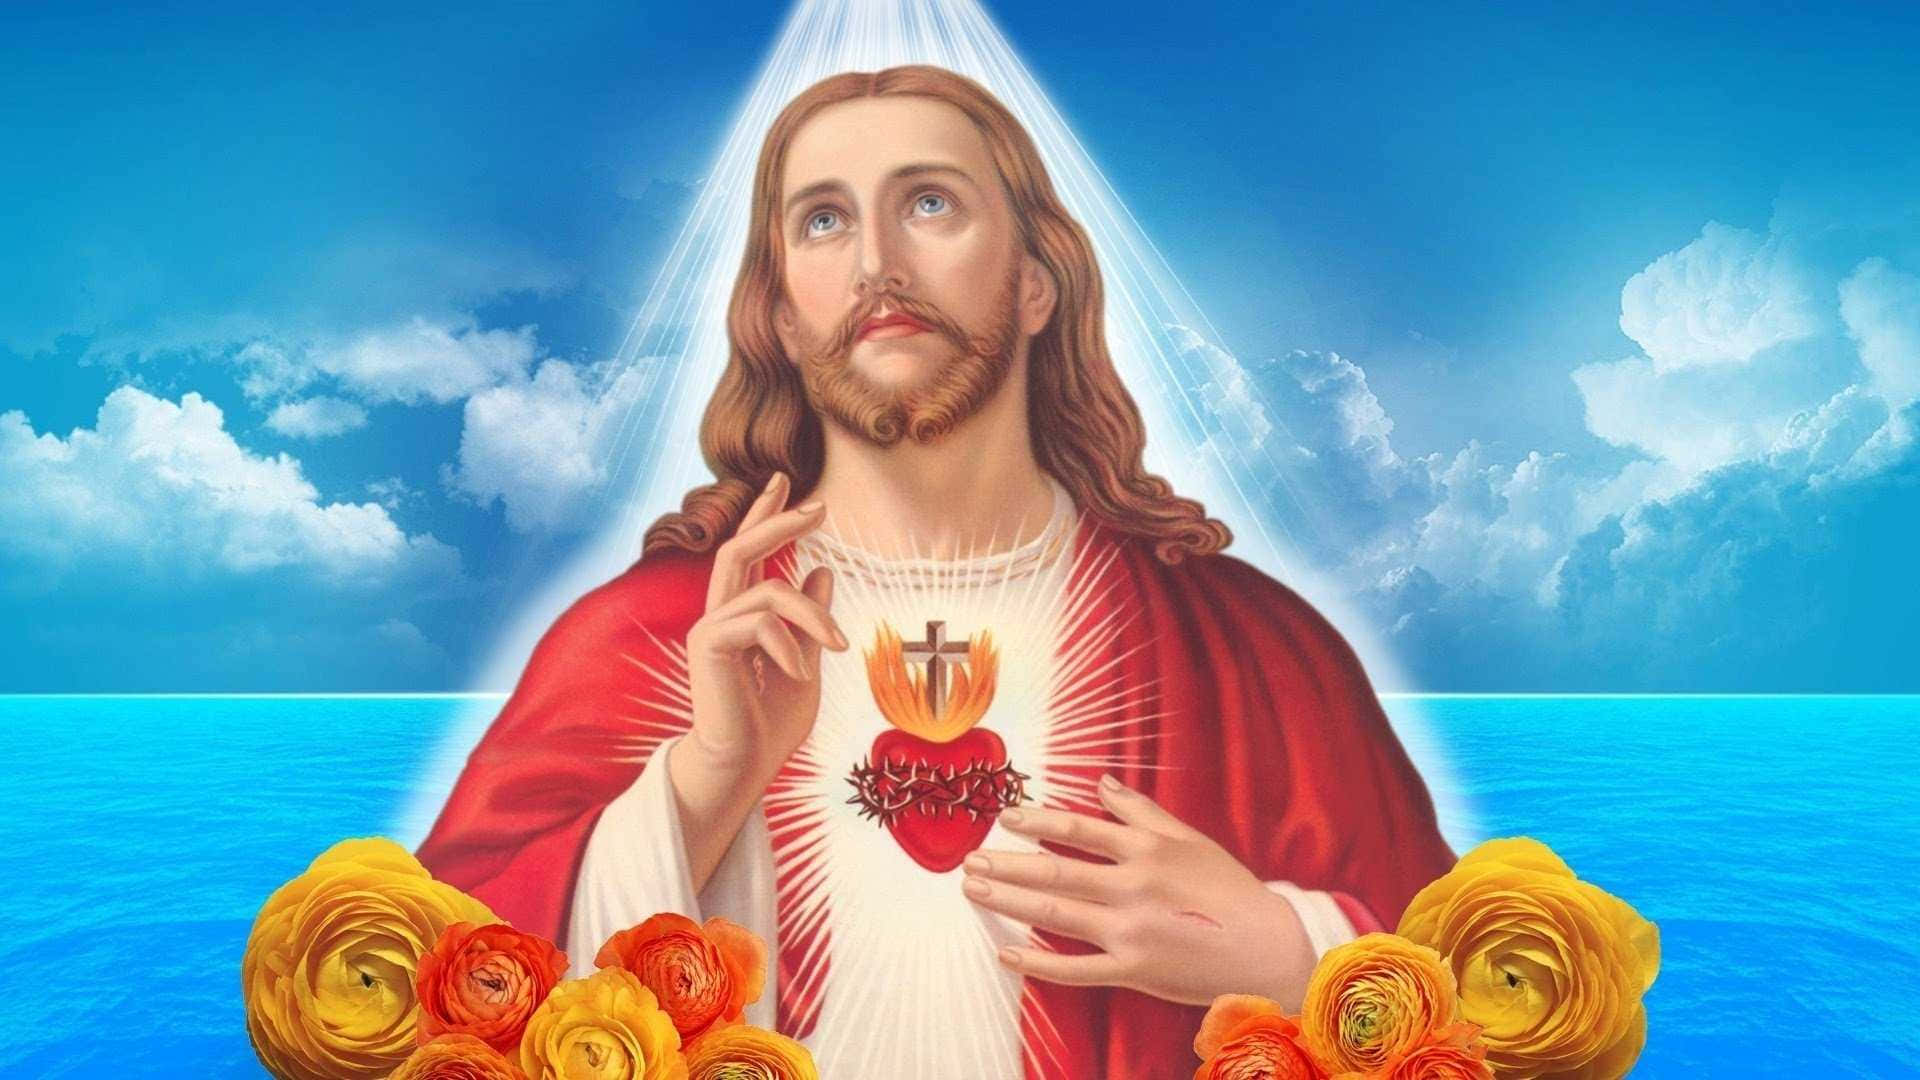 Сотворено христом. Джесус Христ. Икона сердце Иисуса Христа. Иисус картинки. Католическая икона Иисуса Христа.